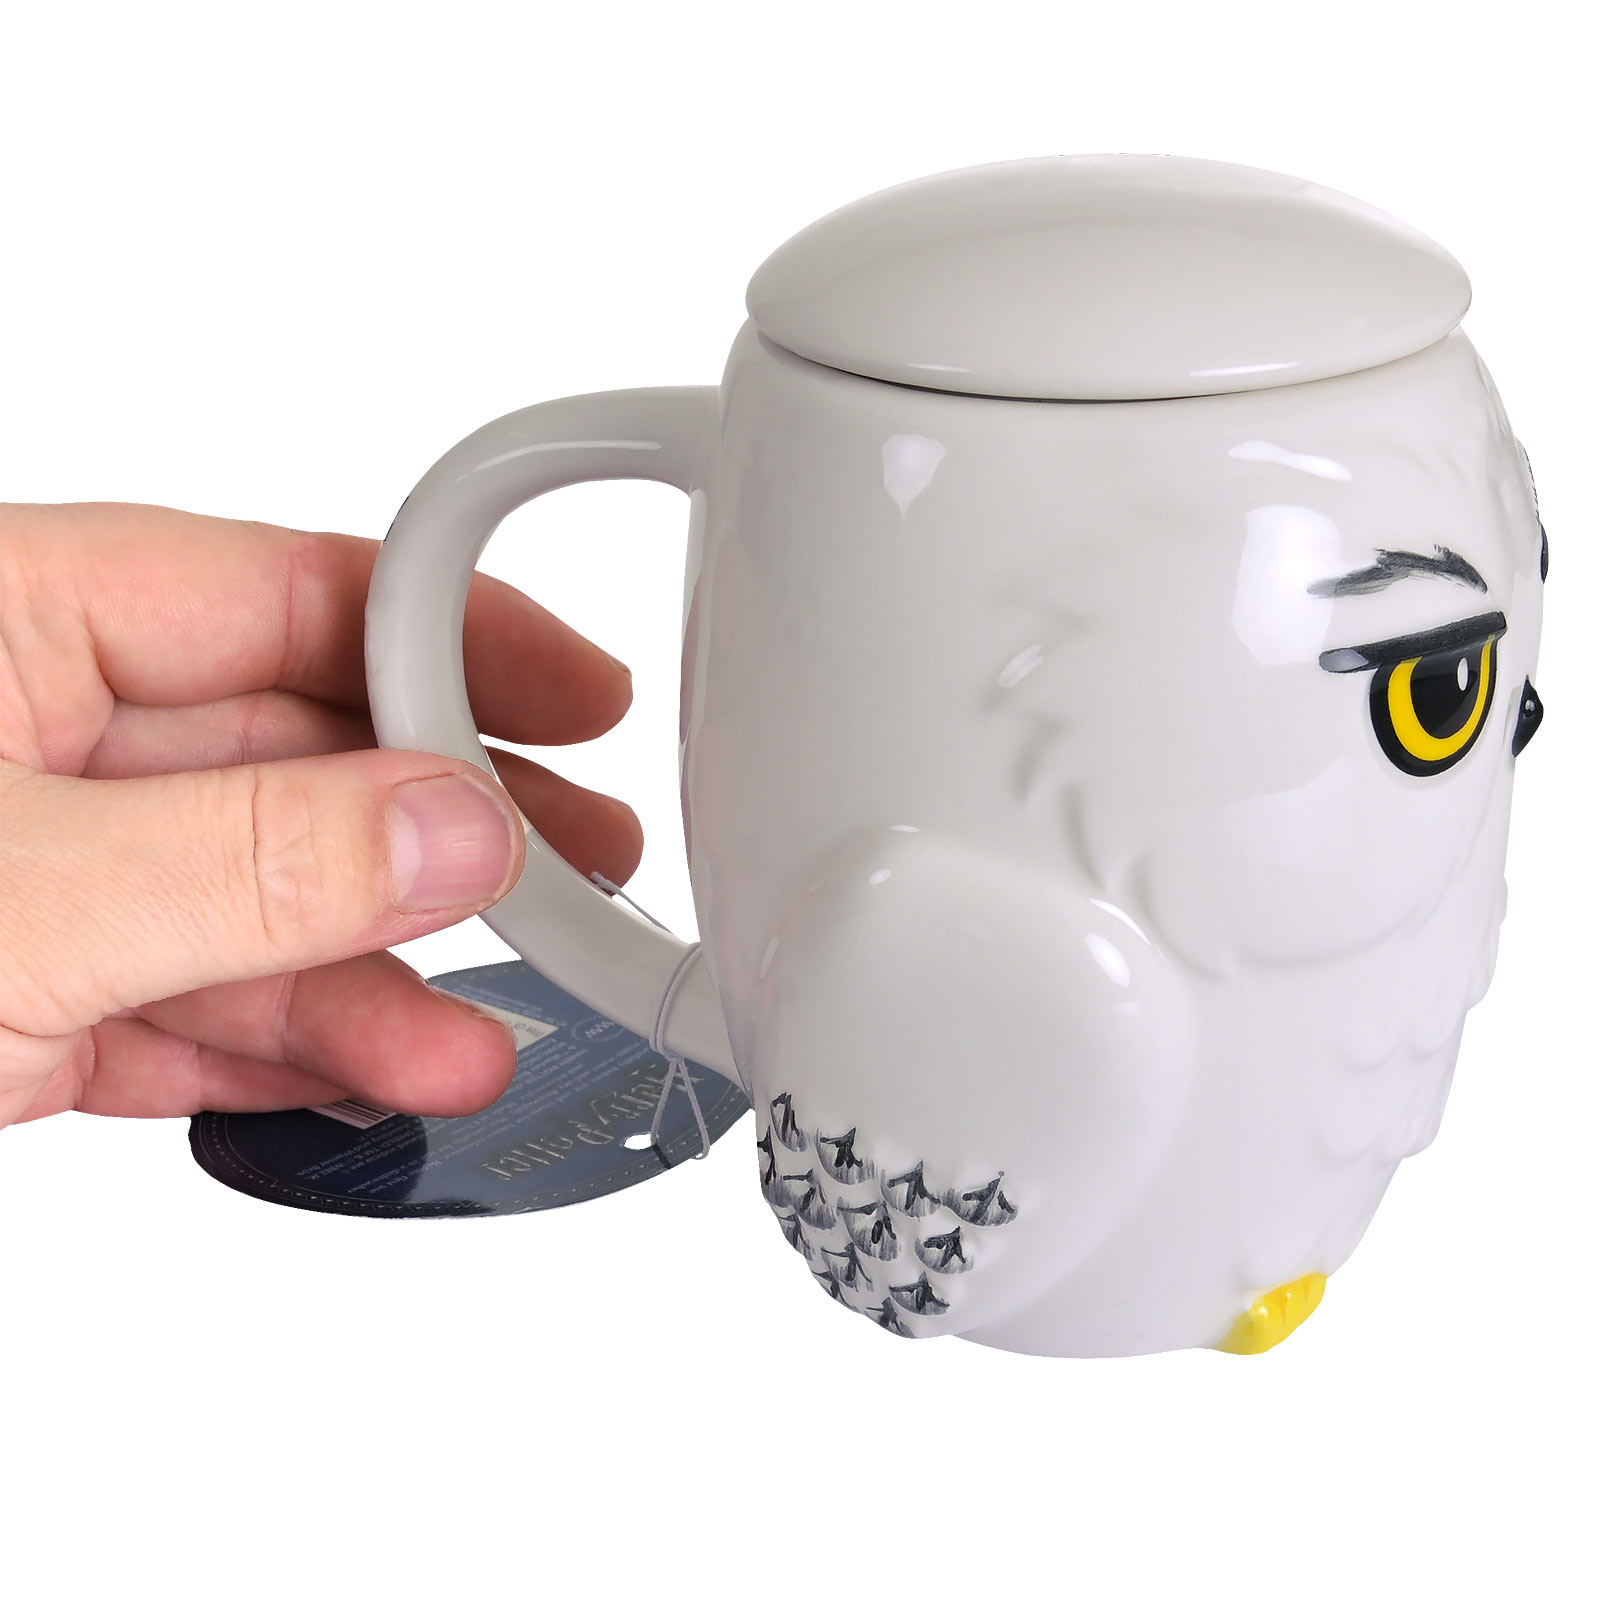 Harry Potter - Hedwig 3D Tasse mit Deckel